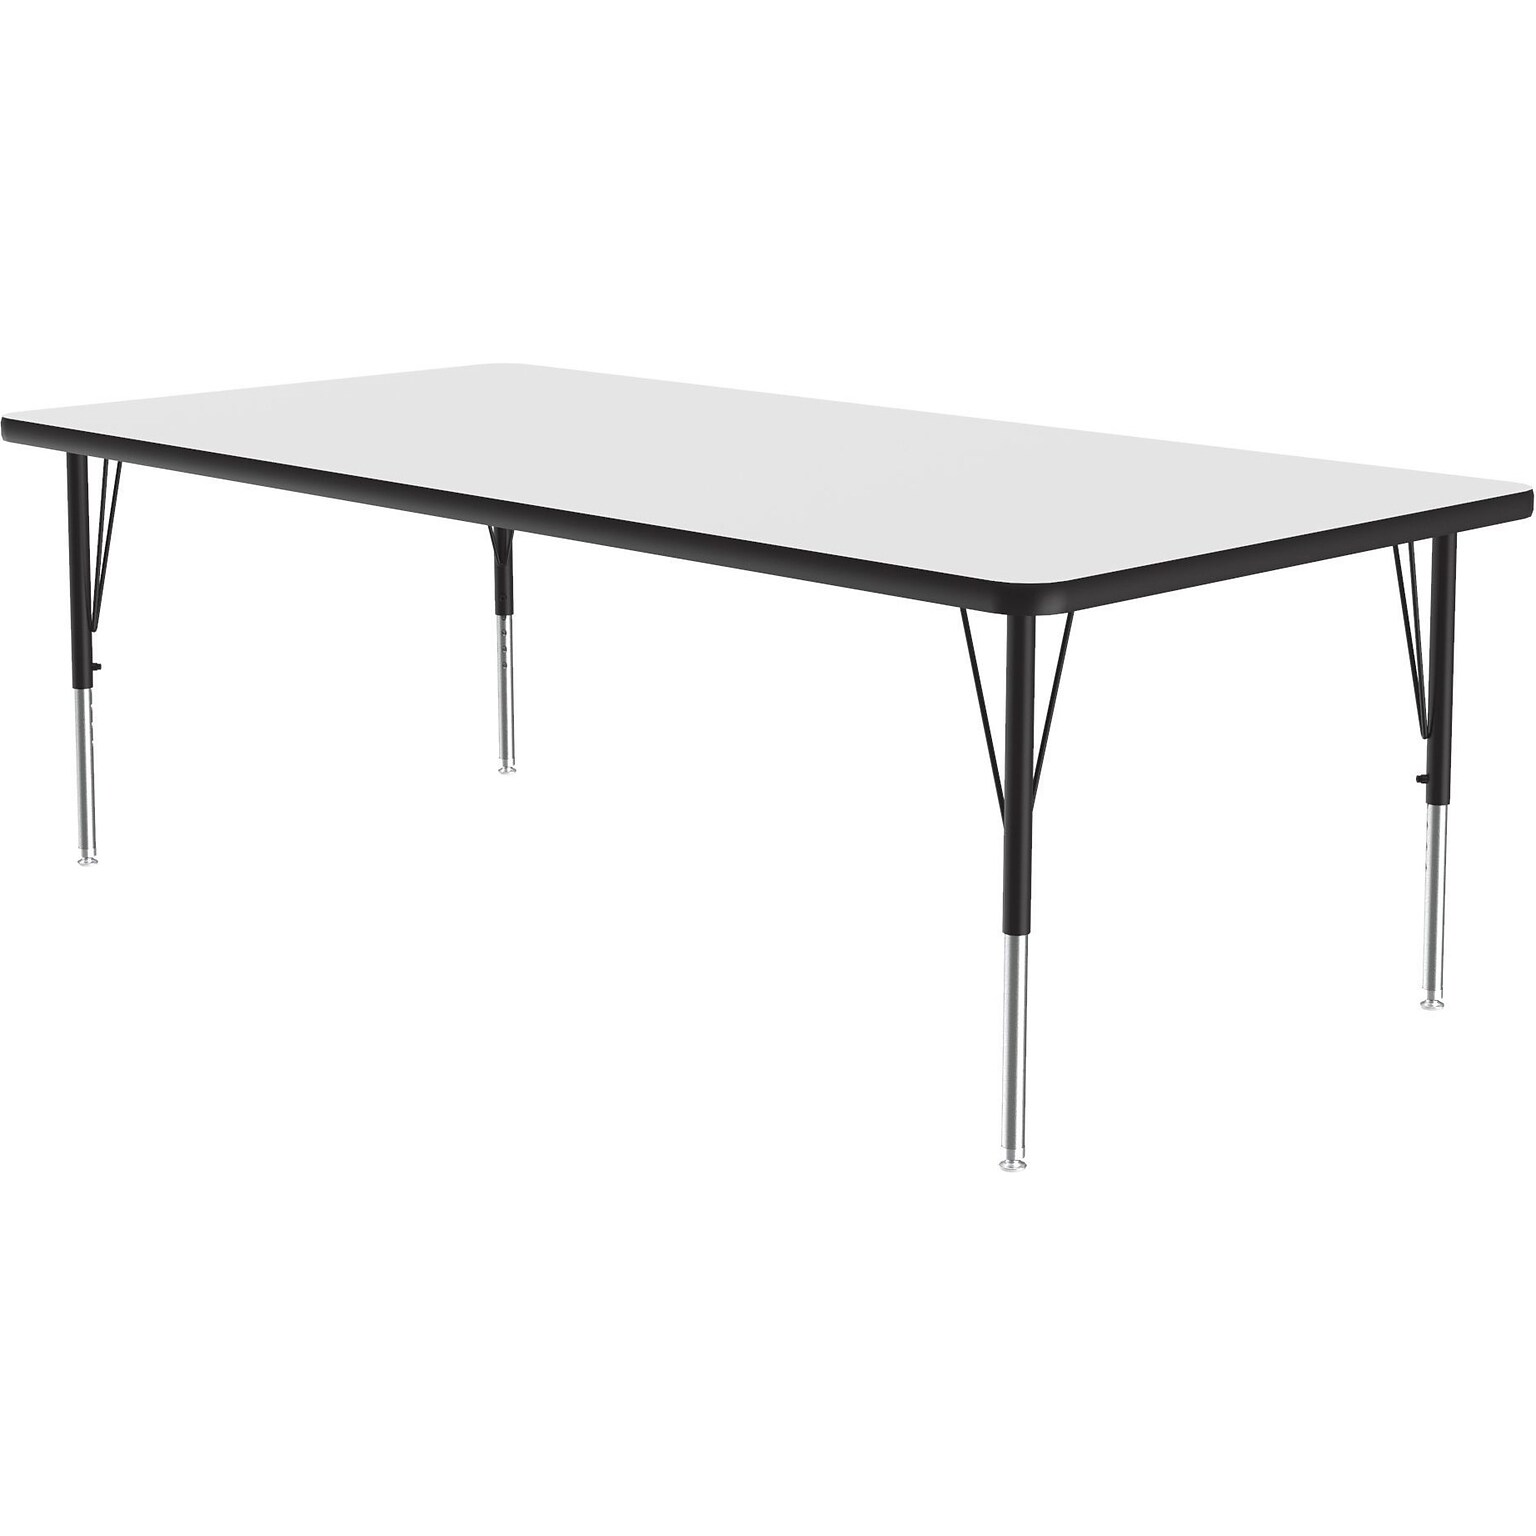 Correll Rectangular Activity Table, 72 x 30, Height-Adjustable, Frosty White/Black (A3072DE-REC-80)